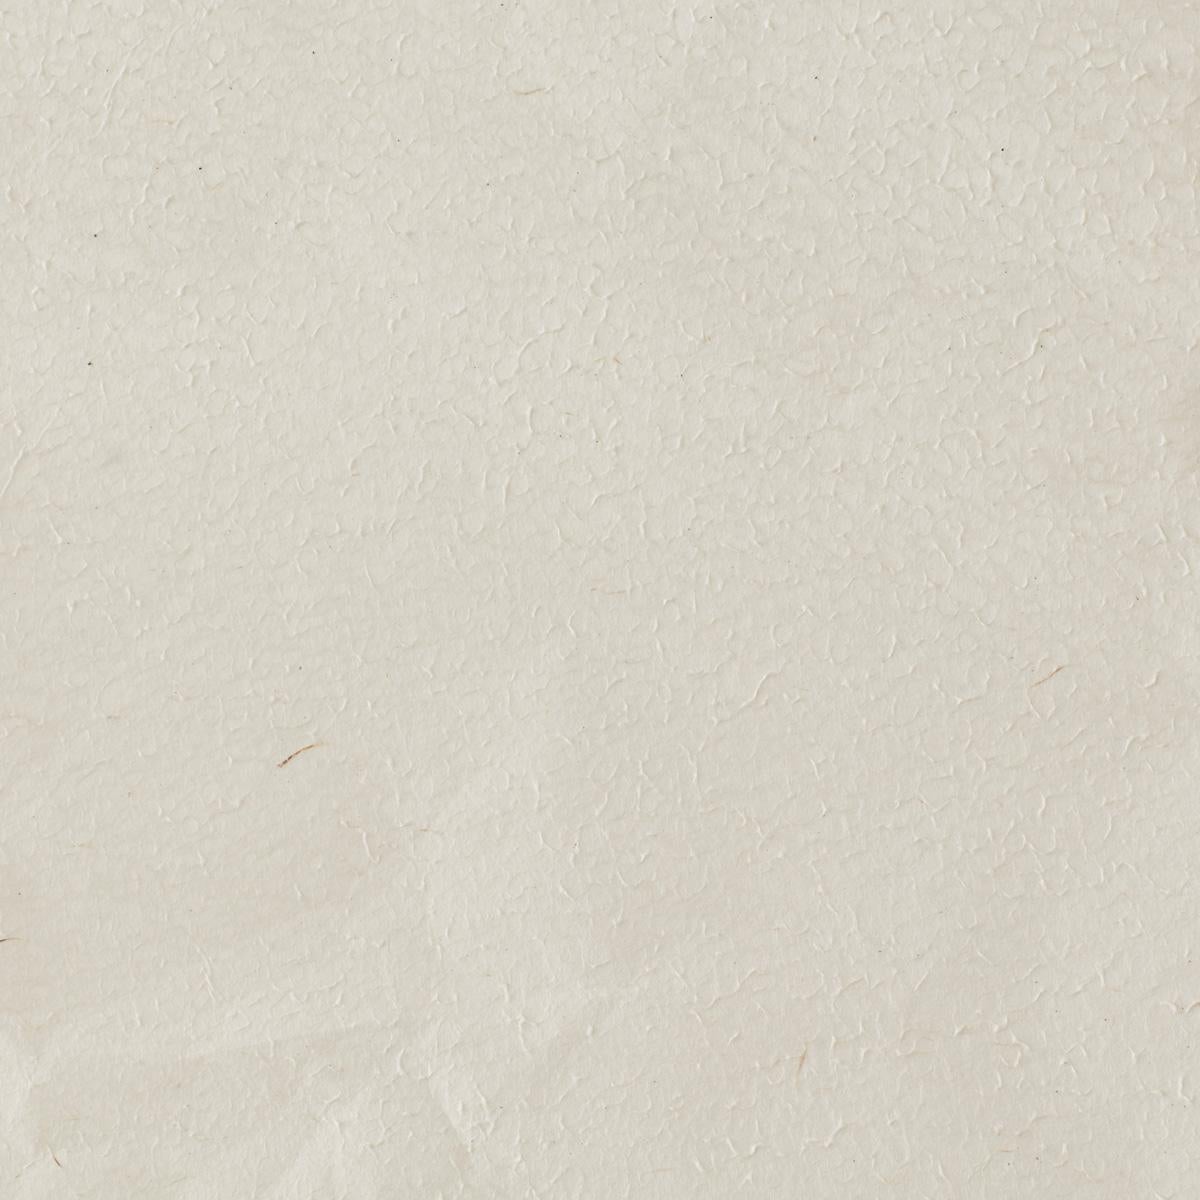 David Horan Paper floor light in semi-matte finish for Béton Brut, UK, 2022 For Sale 2